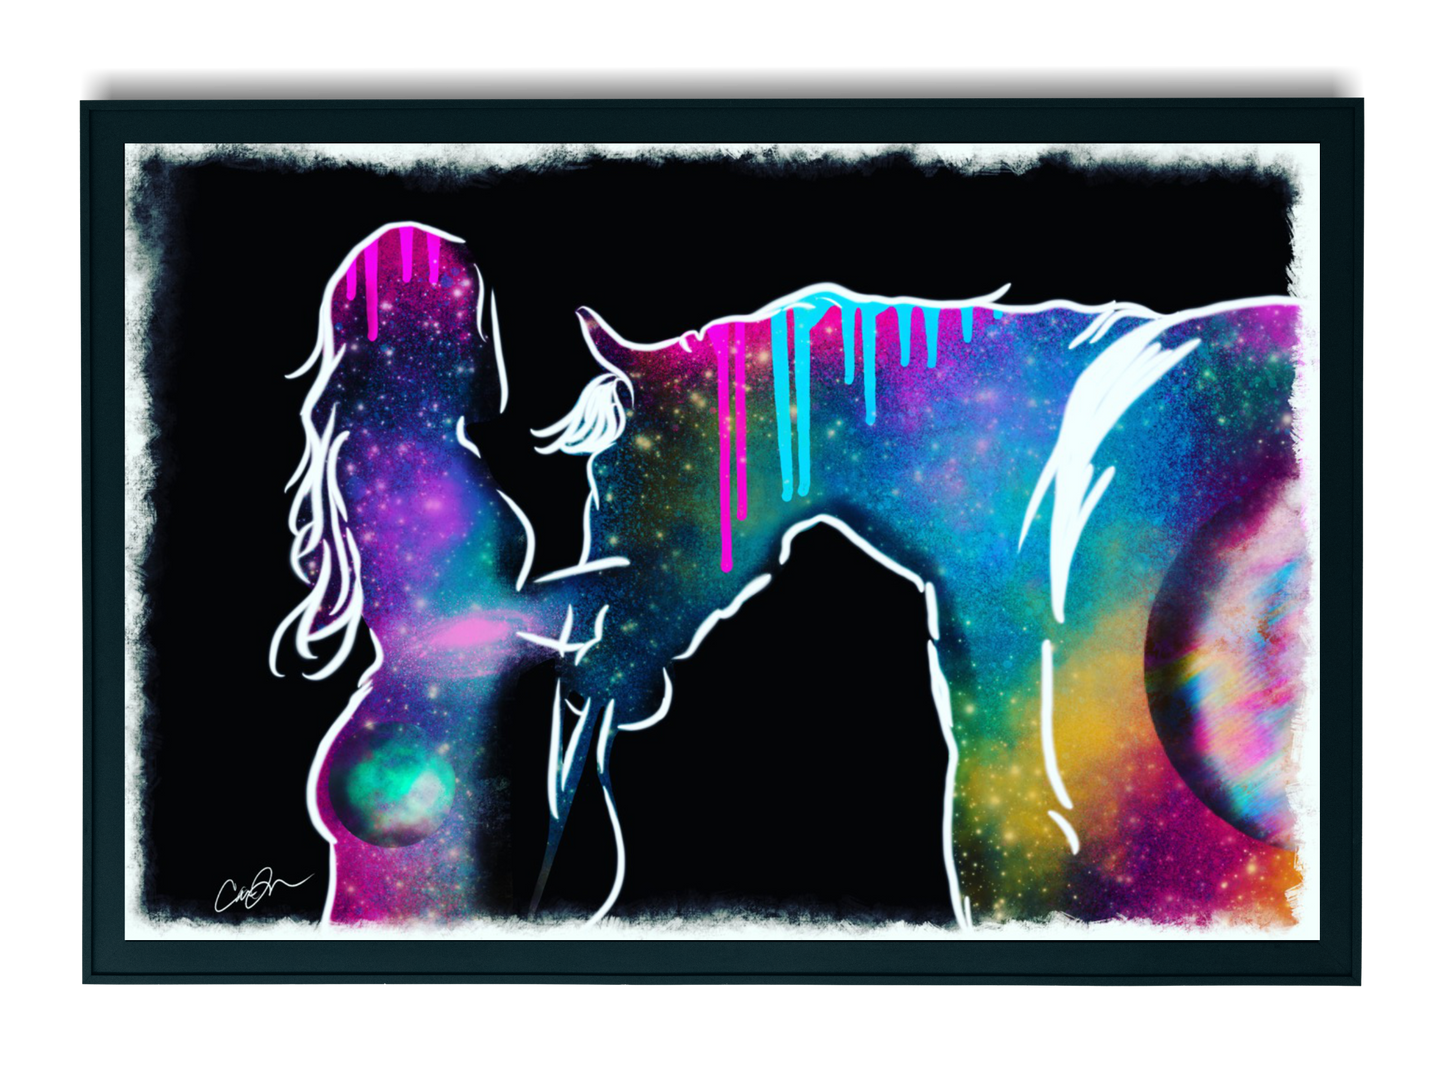 Lady and Horse Universe Digital Art Print